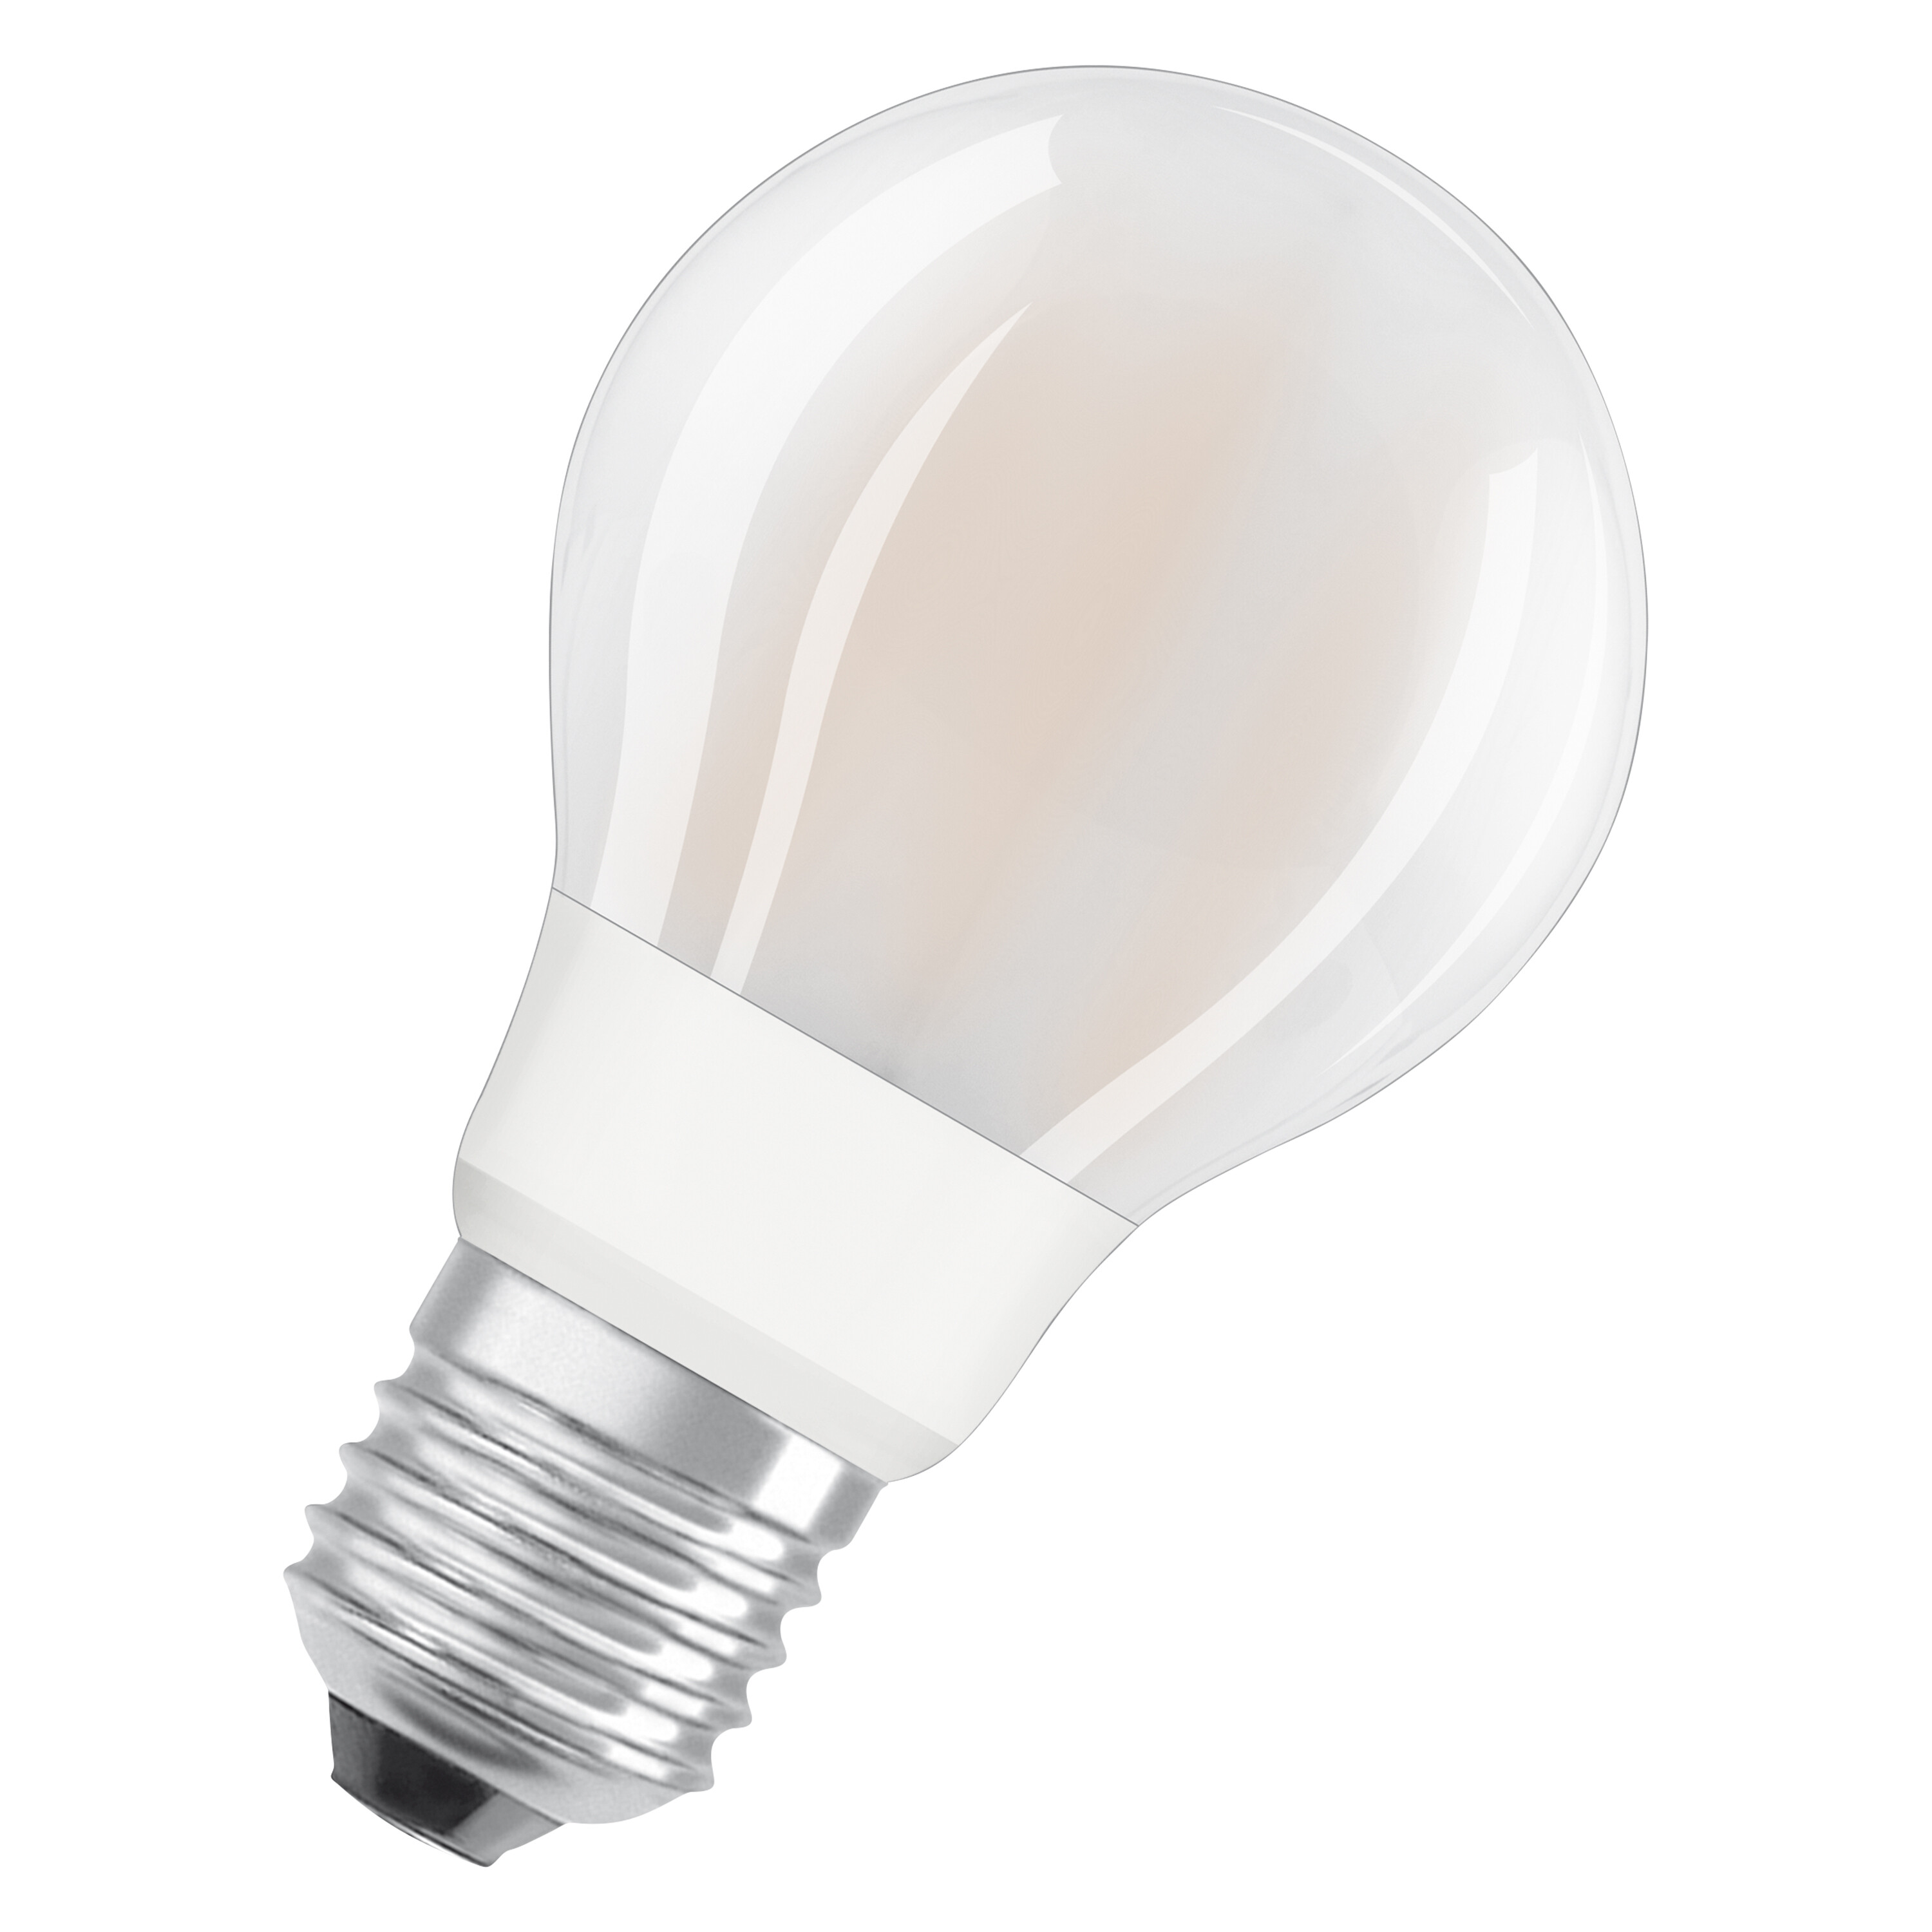 LEDVANCE SMART+ Filament Classic Lampe 1521 Lumen Warmweiß Dimmable LED